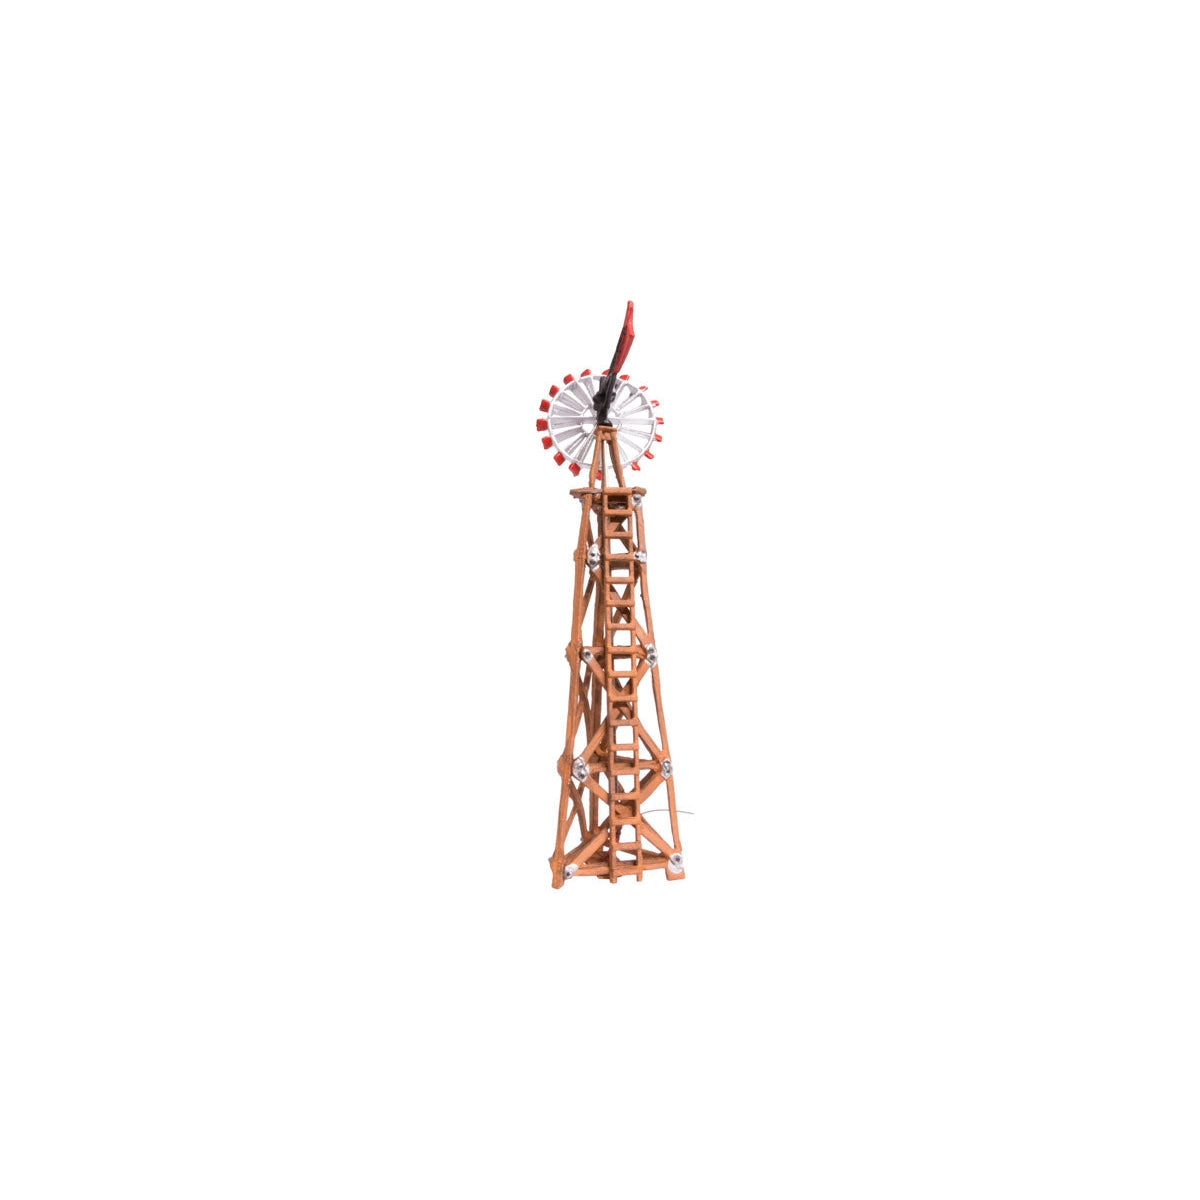 Woodland Scenics 4937 Windmill - N Scale